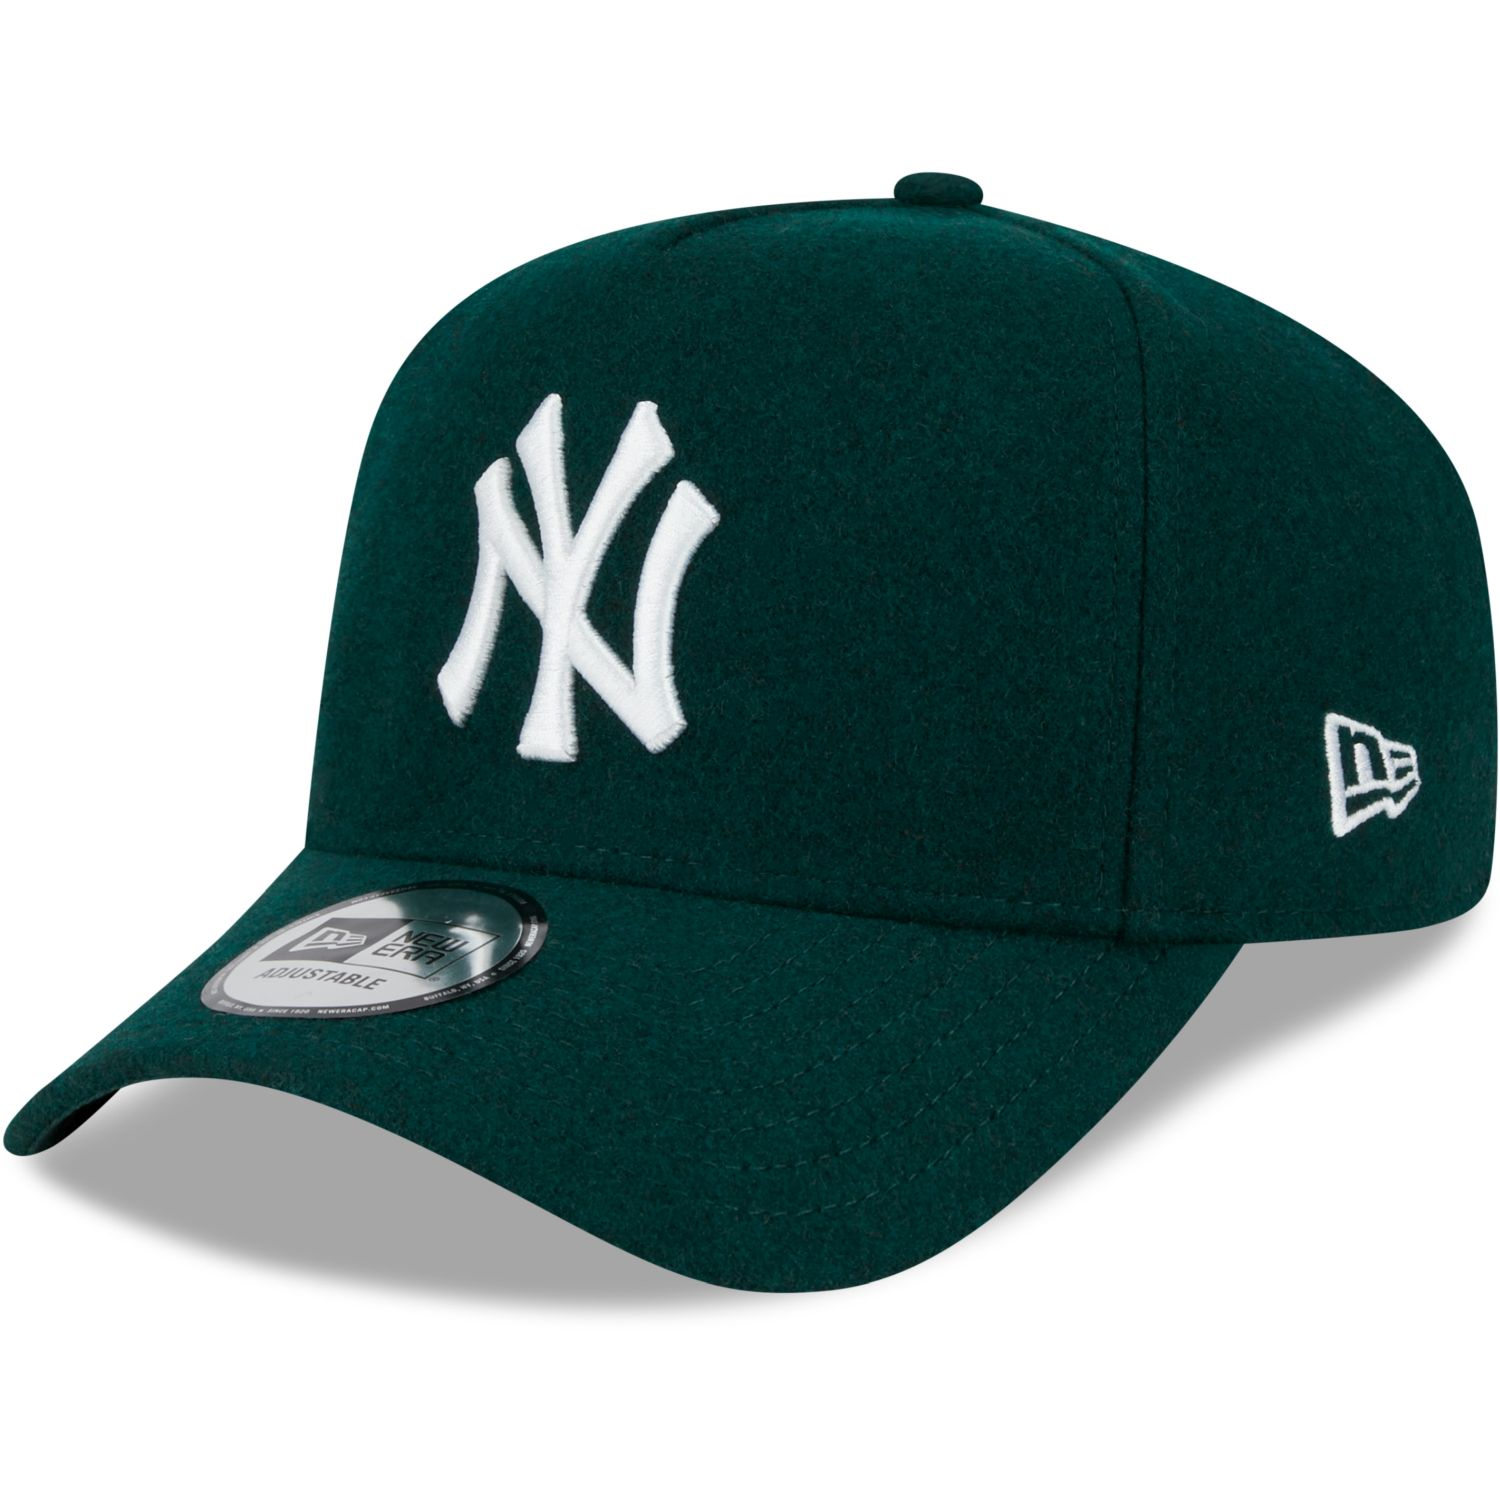 New Era Melton eFrame New York Yankees Men Caps Green in size:ONE Size